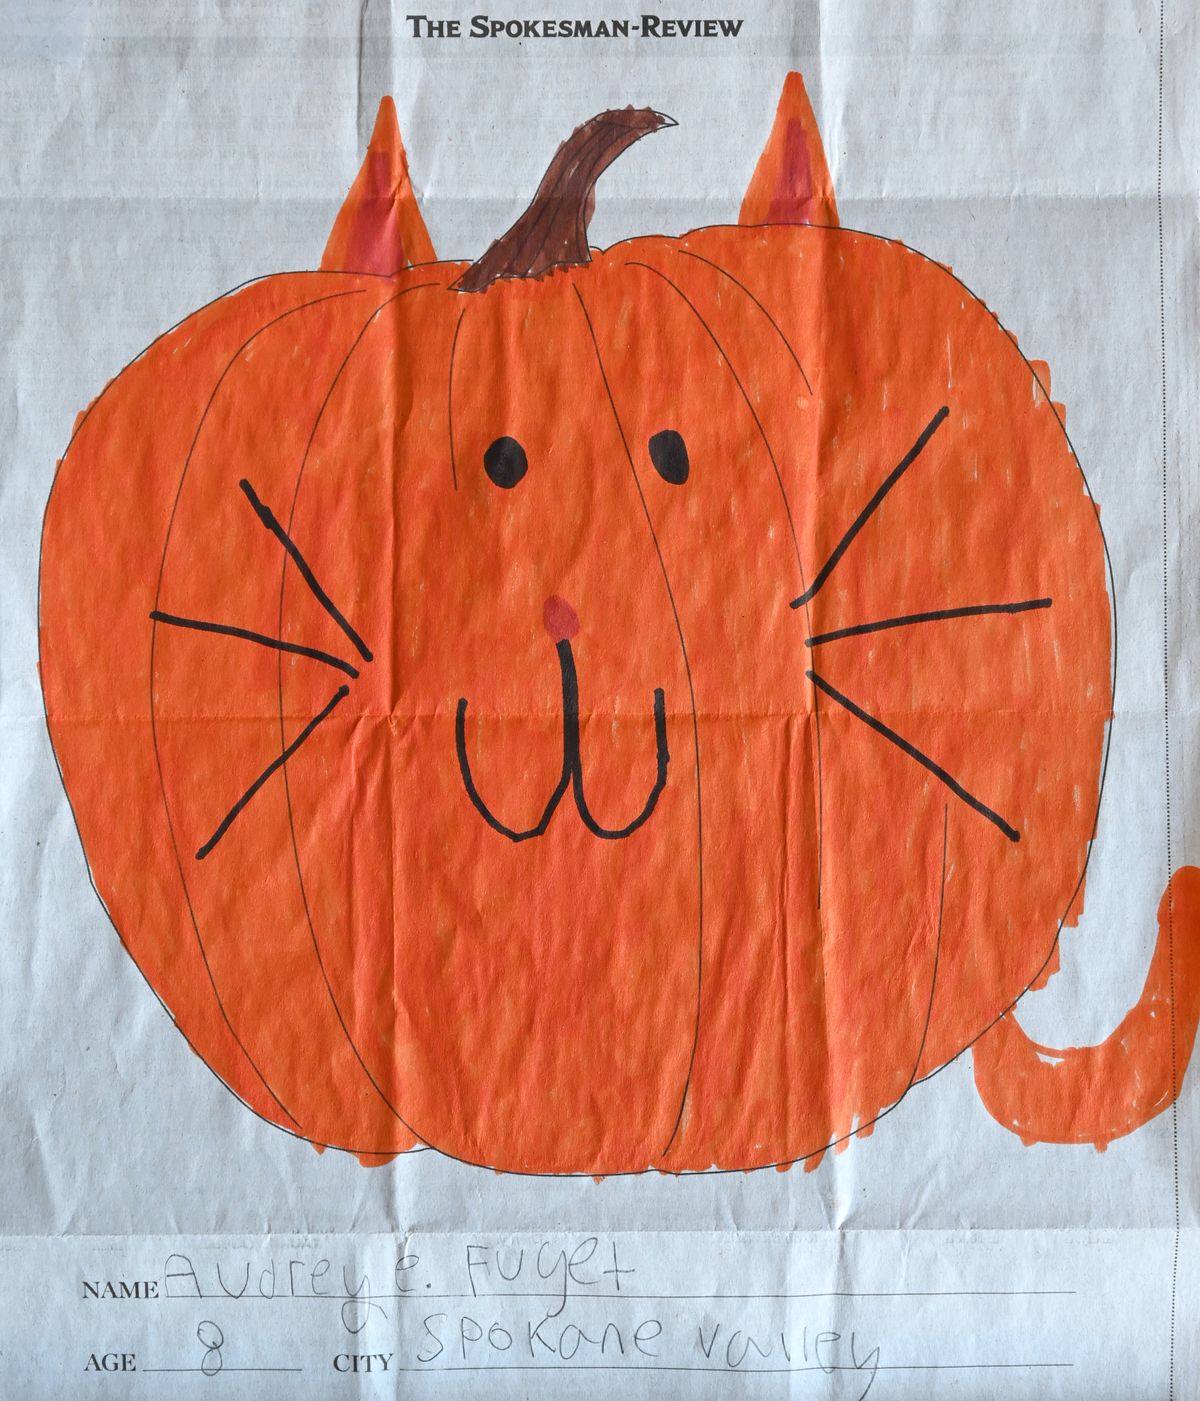 2021 pumpkin coloring contest – Audrey Fuget, 8, of Spokane Valley.  (The Spokesman-Review)